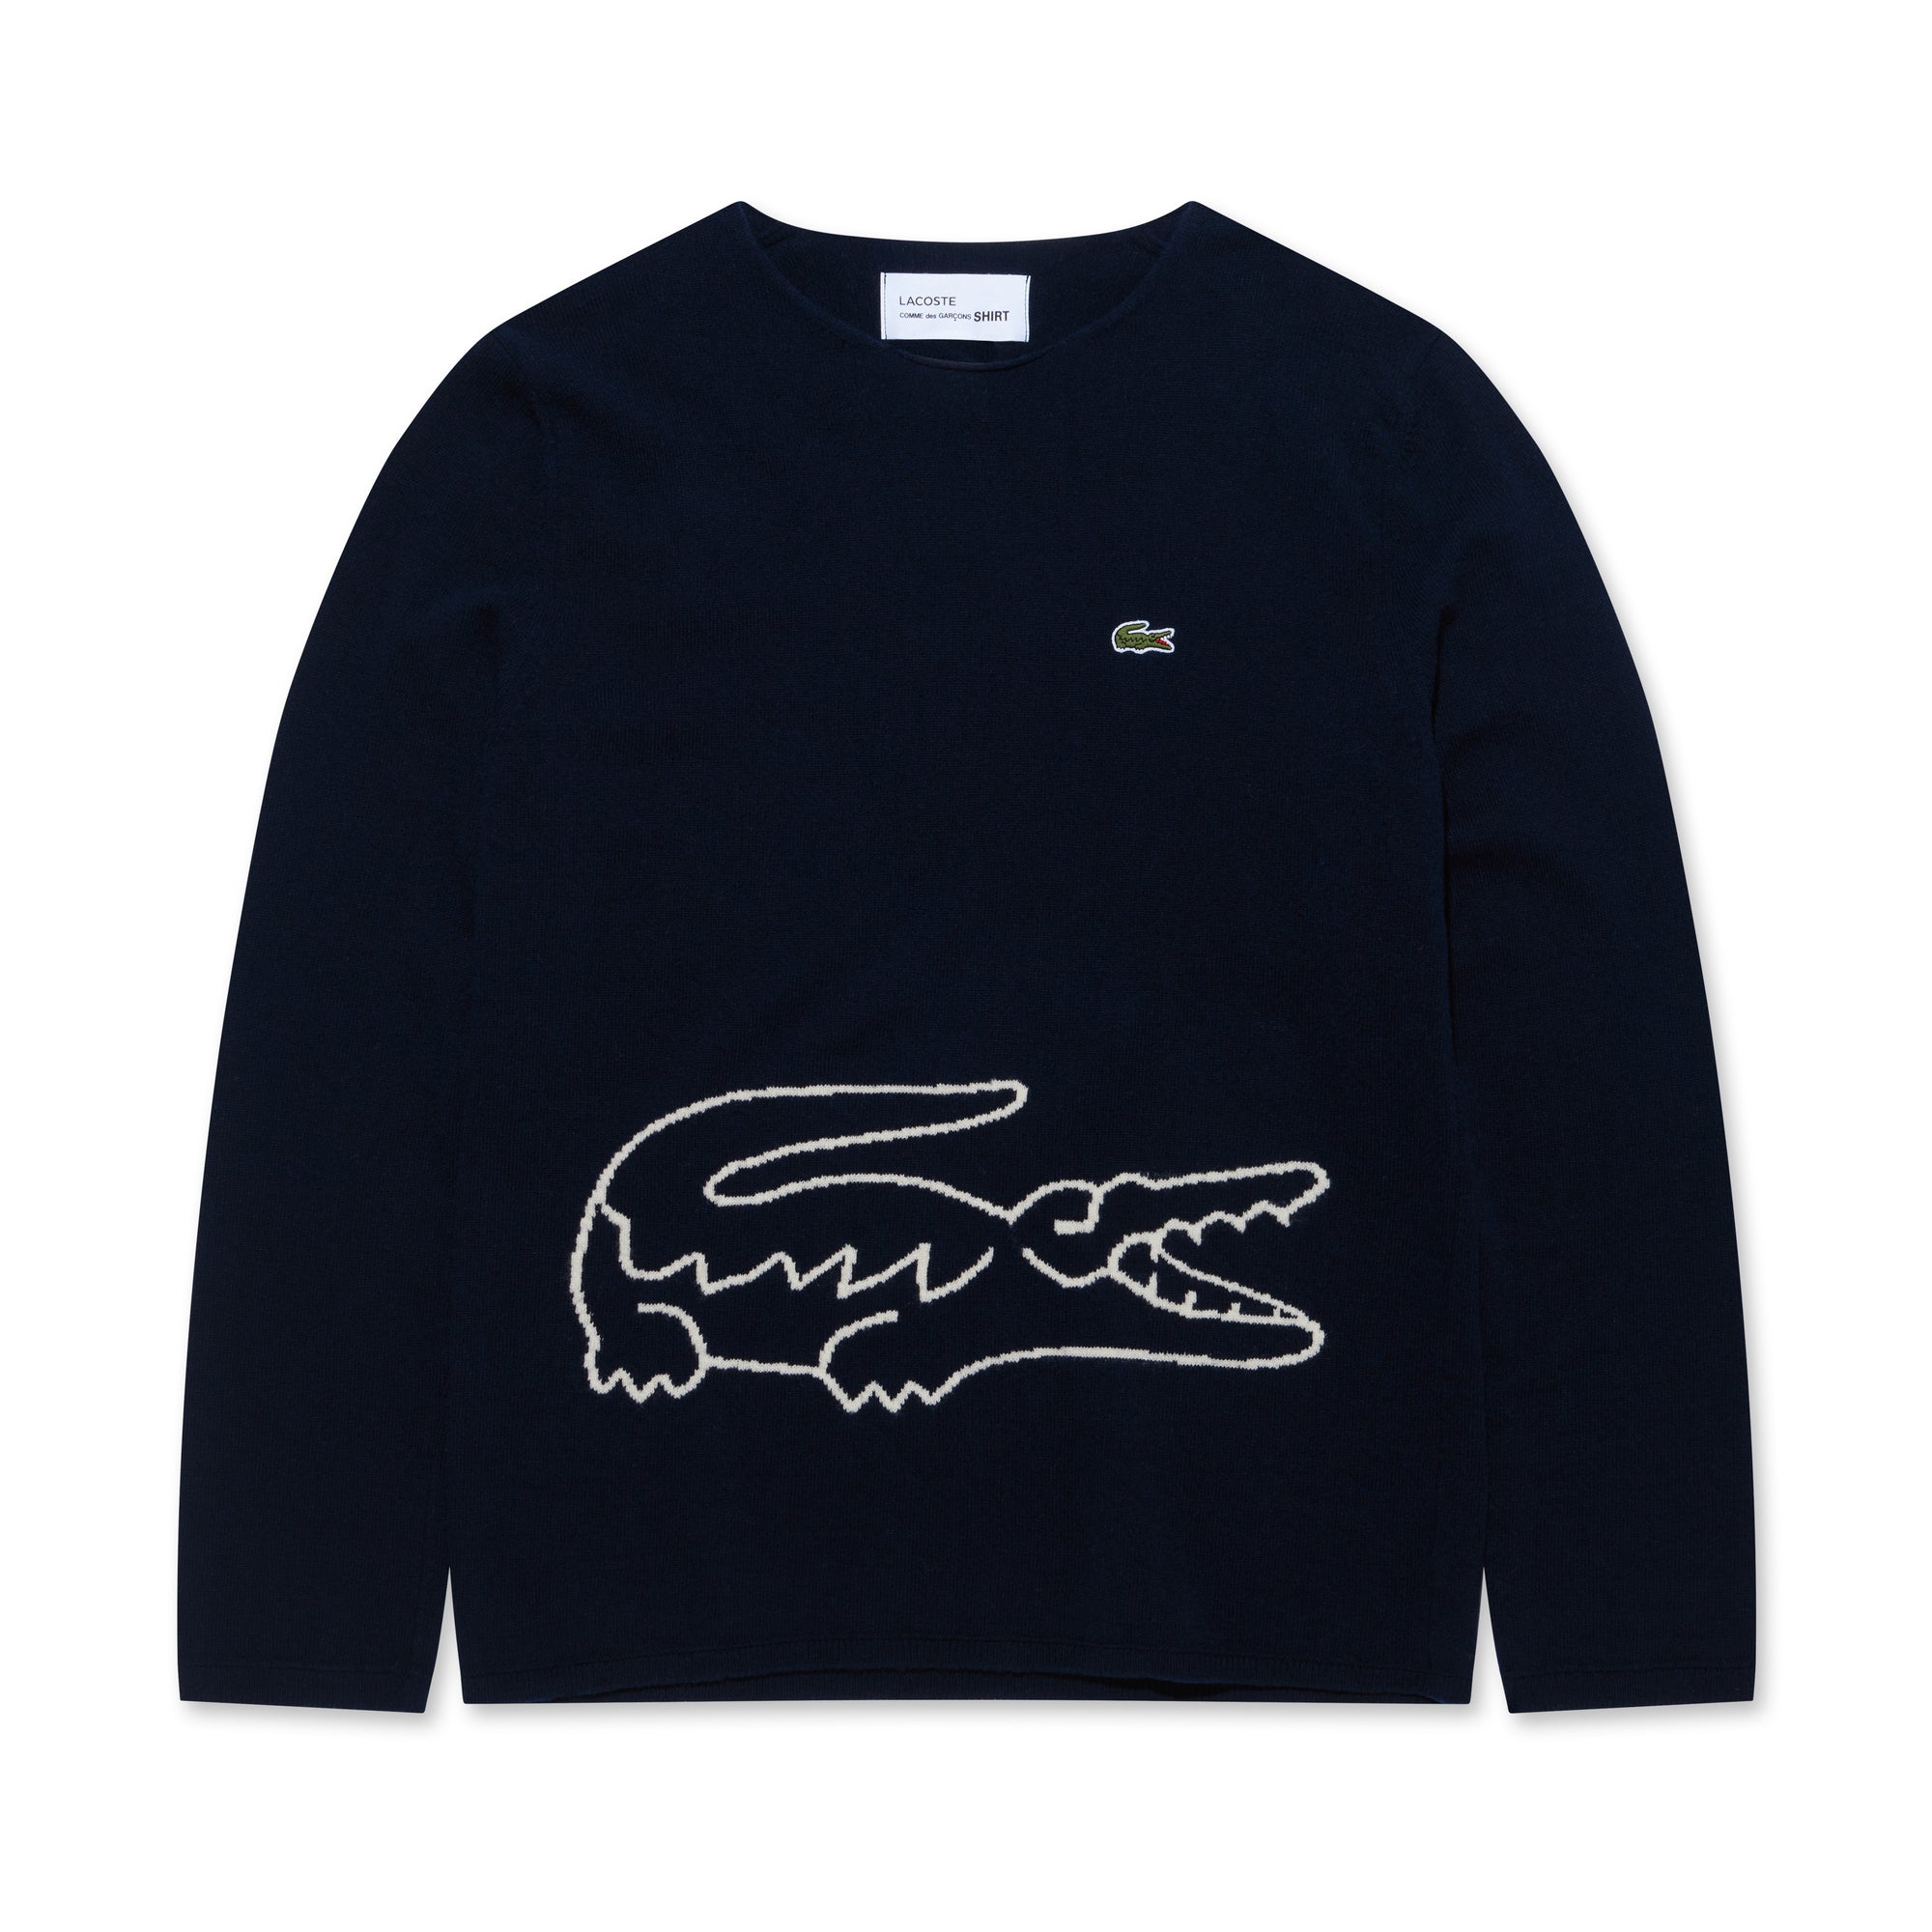 CDG Shirt - Lacoste Men's Knit Sweater - (Black) view 5